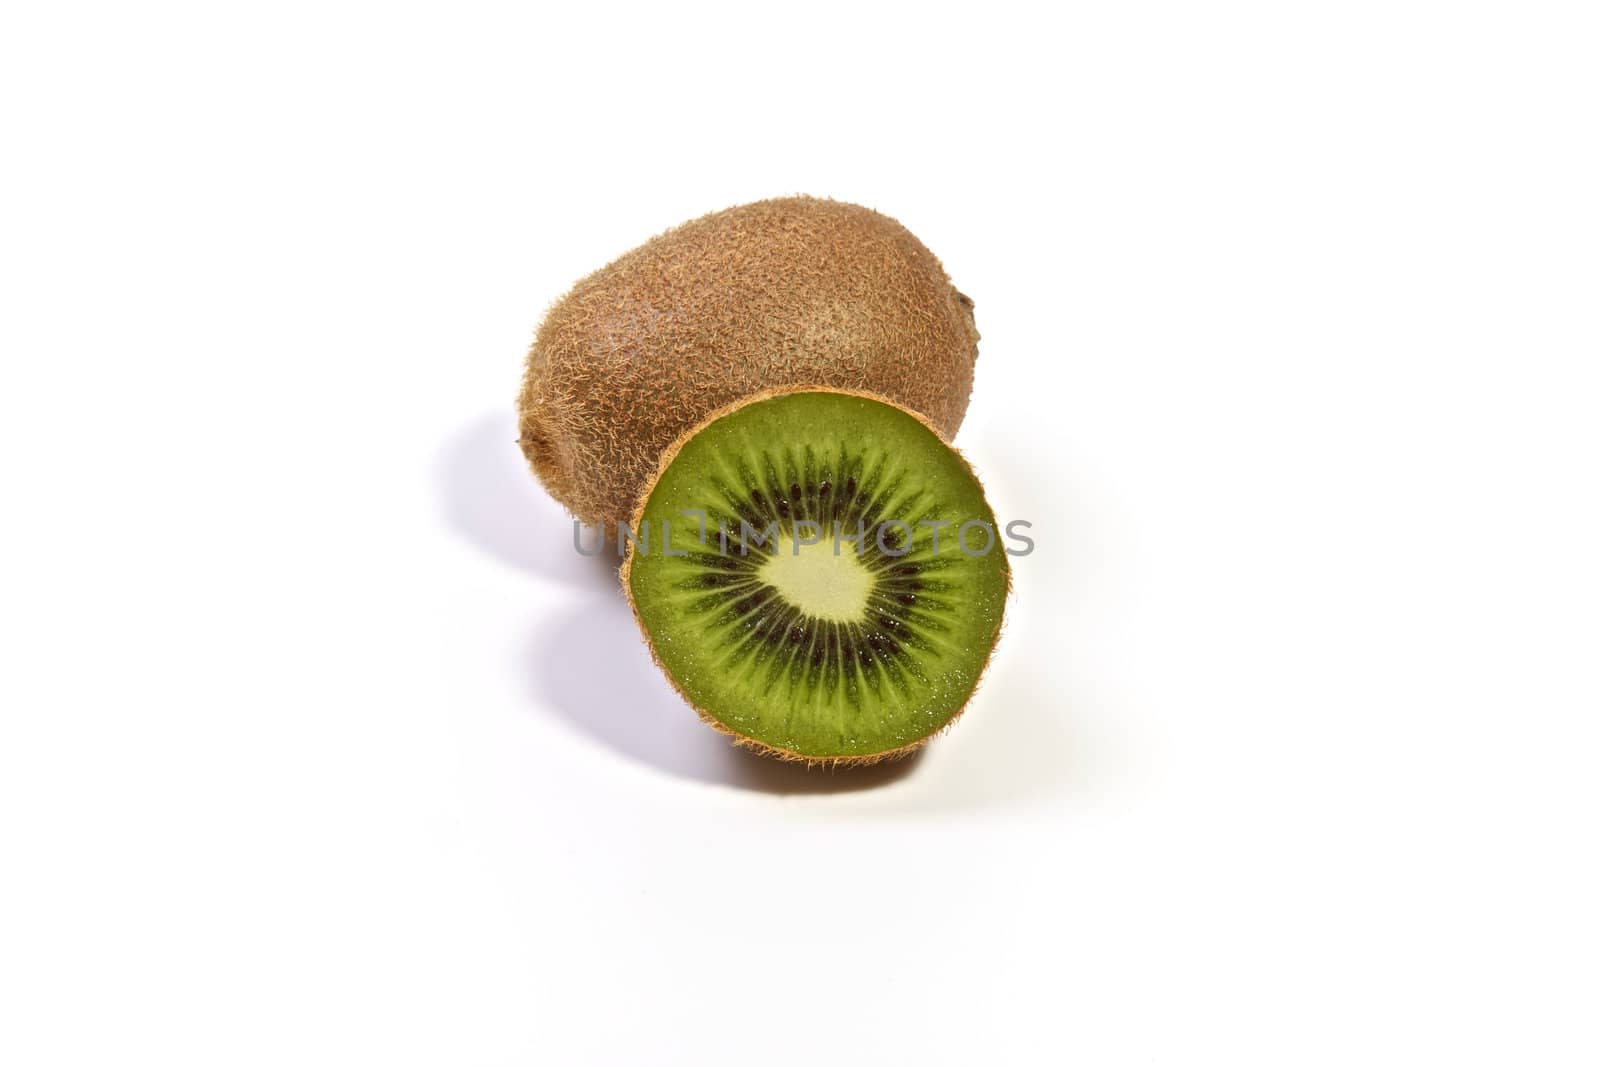 Delecious kiwifruit cut and isolated on a white background